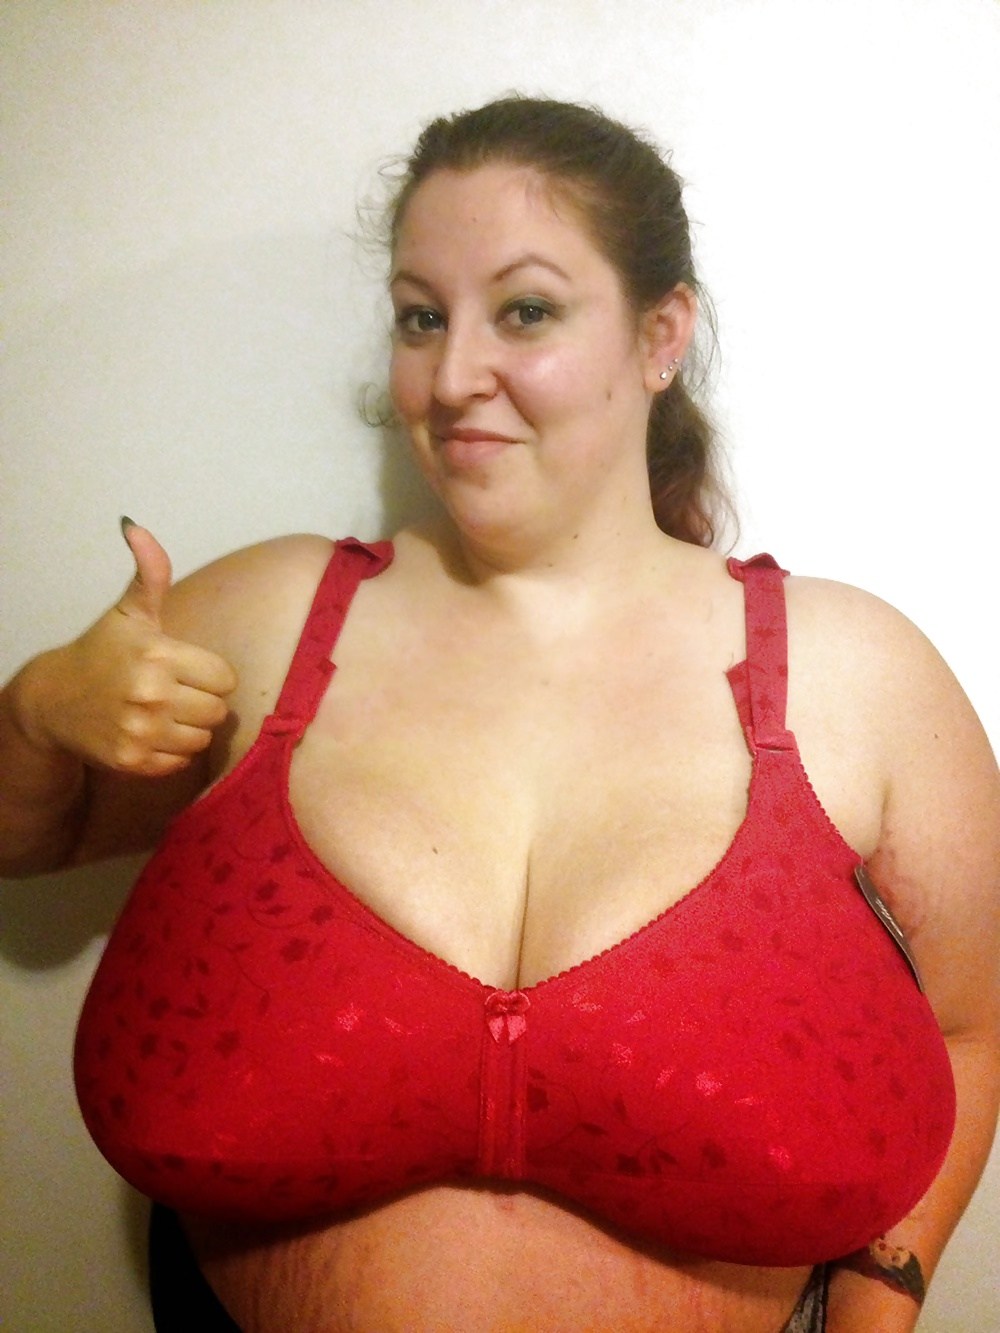 Huge Fat Boobs in a Bra (68 photos) pic